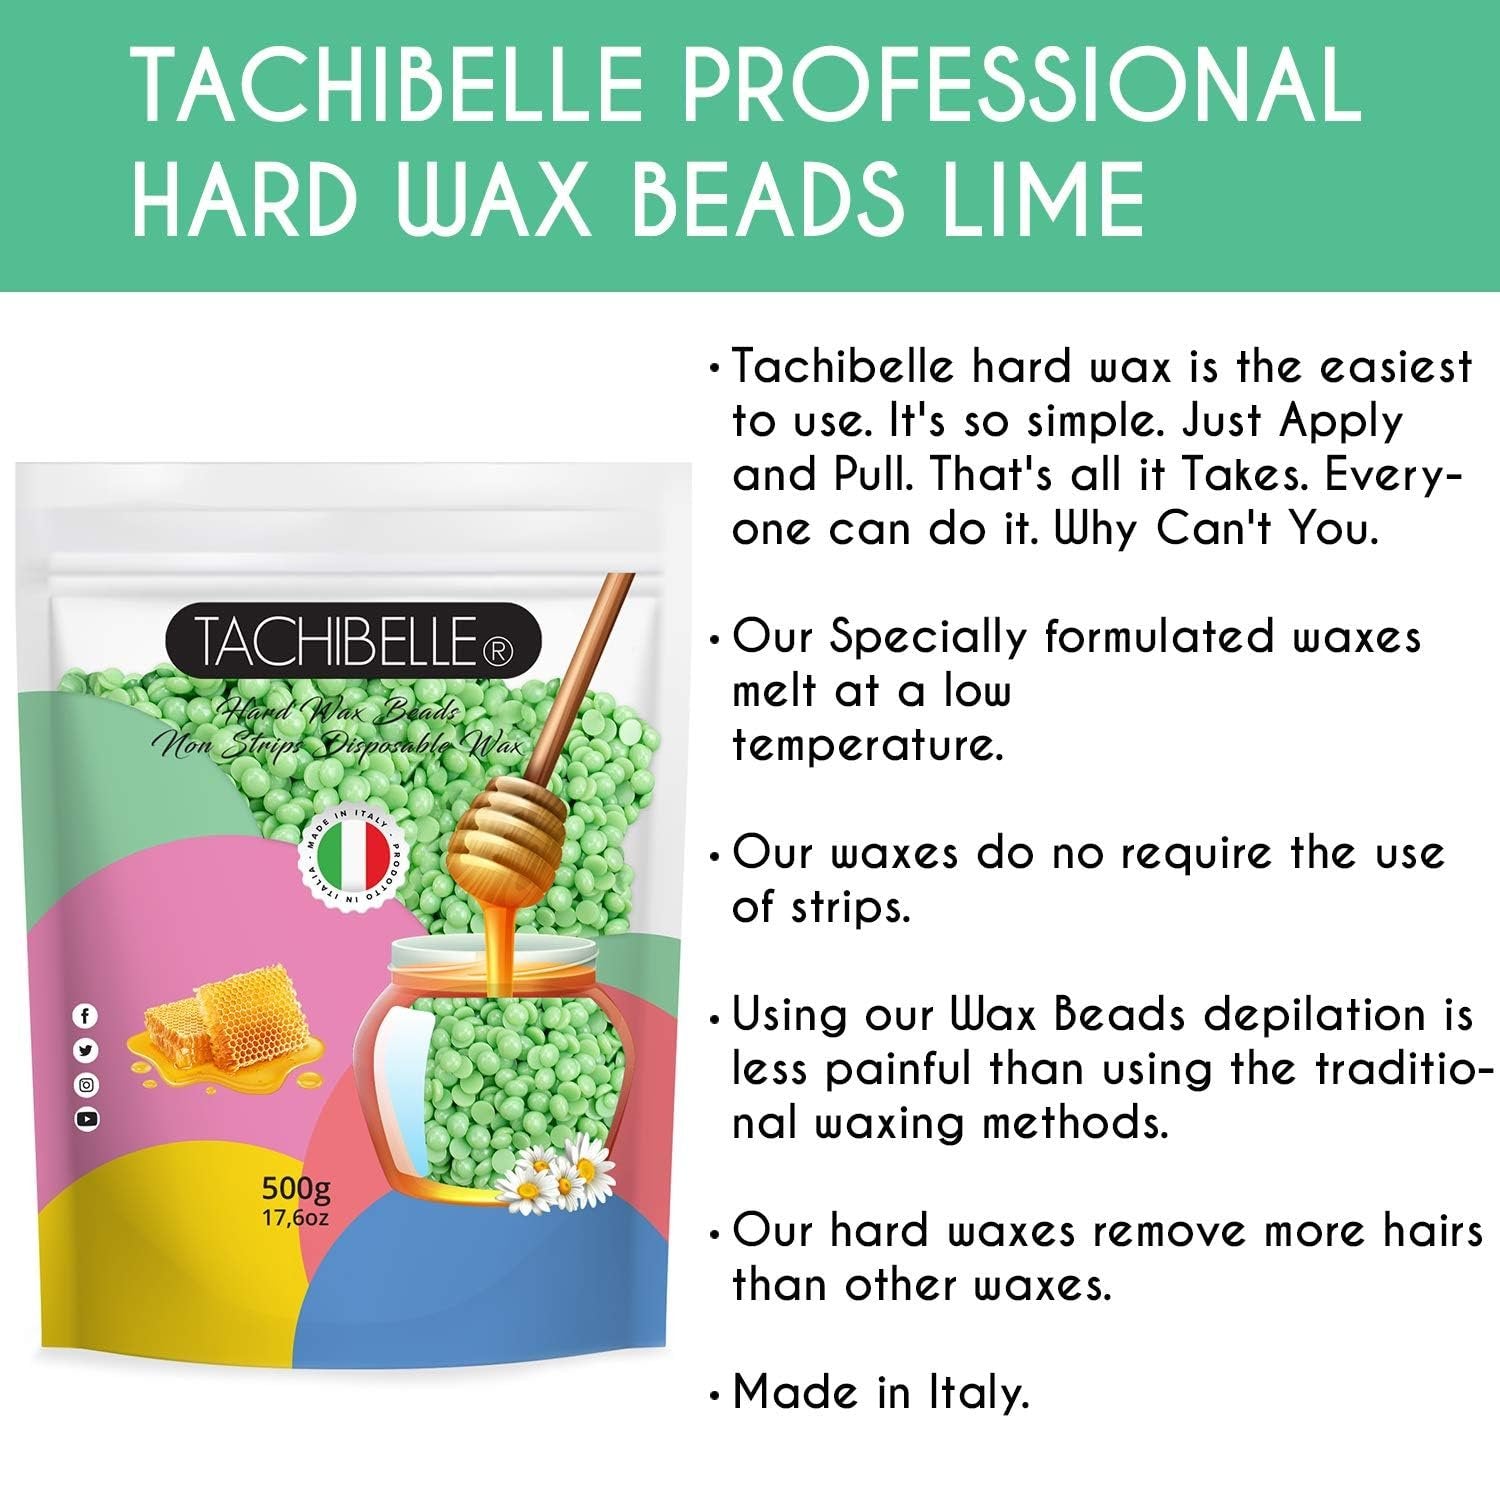 Easy to Use Hard Wax Beans, Hair Removal Full Body Brazilian Bikini Beads Waxing for Sensitive Skin Face Bikini Legs Eyebrow 500g/1.1 lb Made In Italy 2 Count